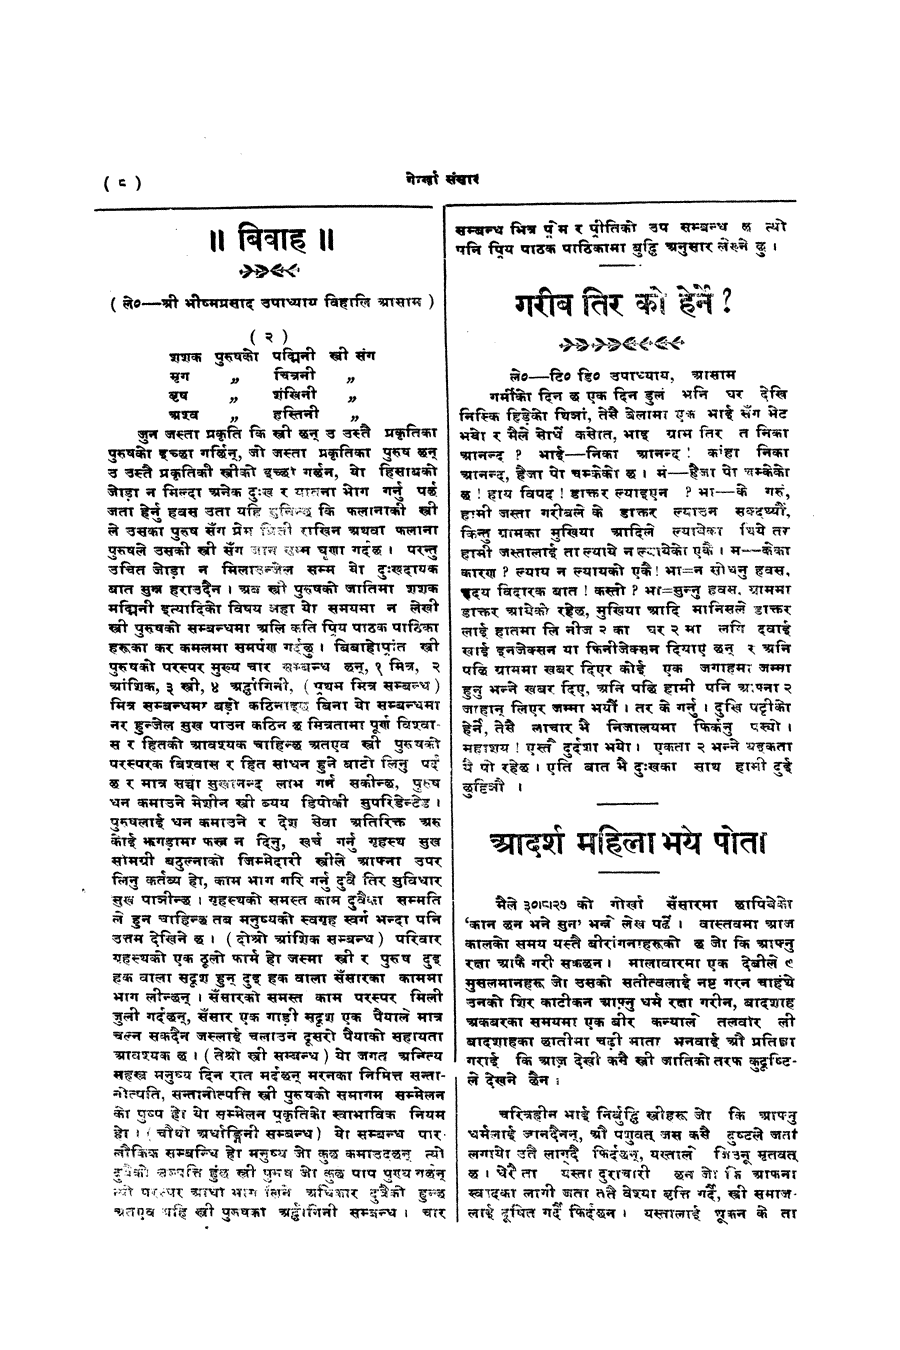 Gorkha Sansar, 13 Sept 1927, page 8